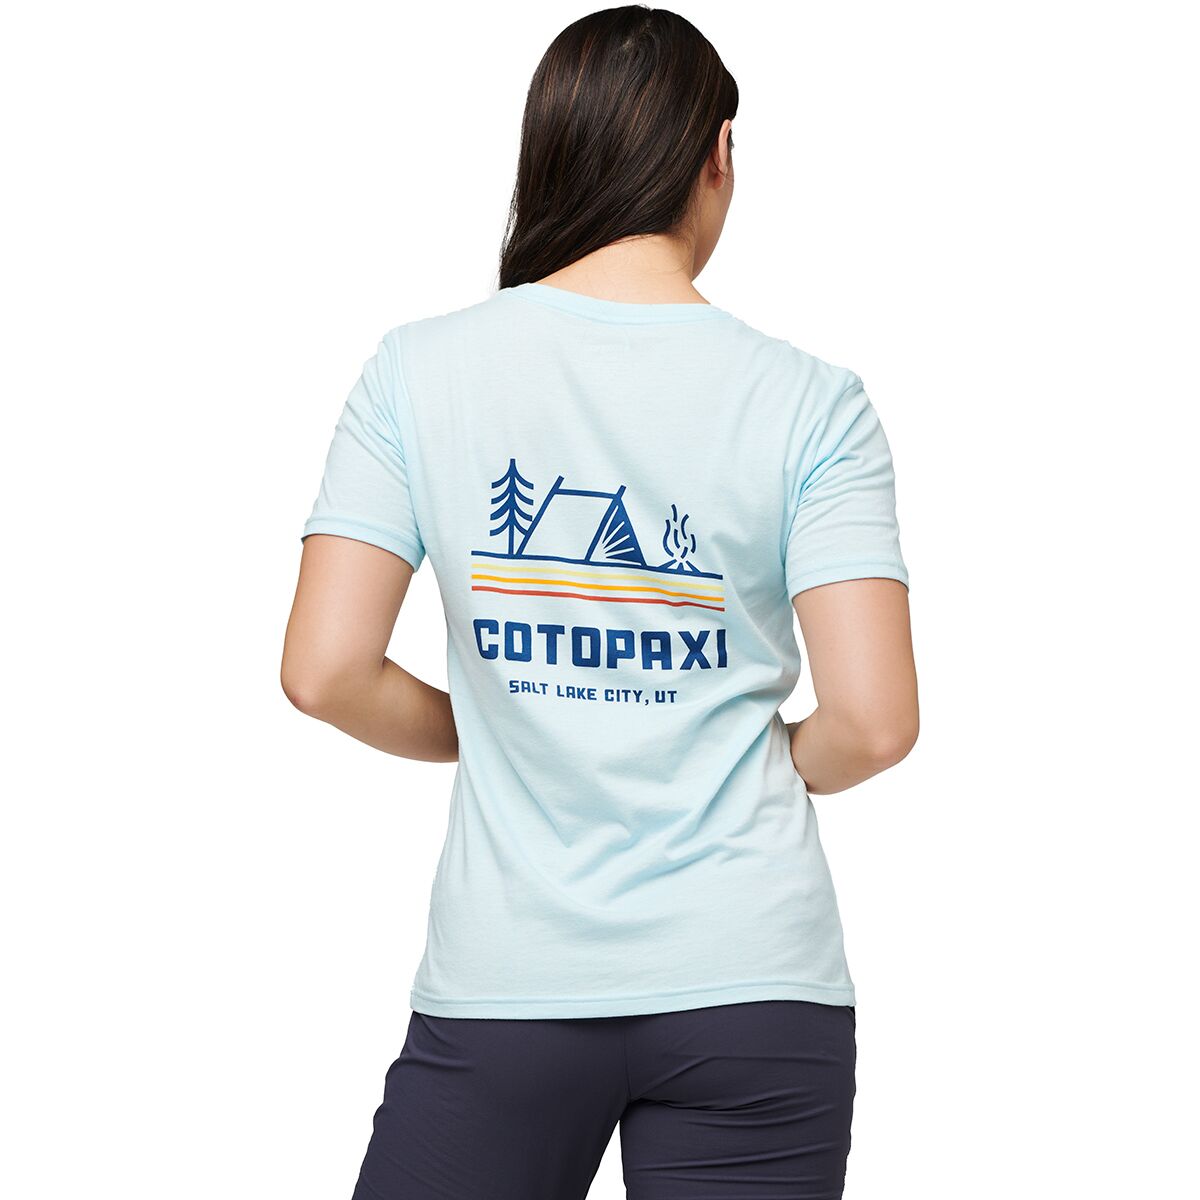 Cotopaxi Camp Life T-Shirt - Women's